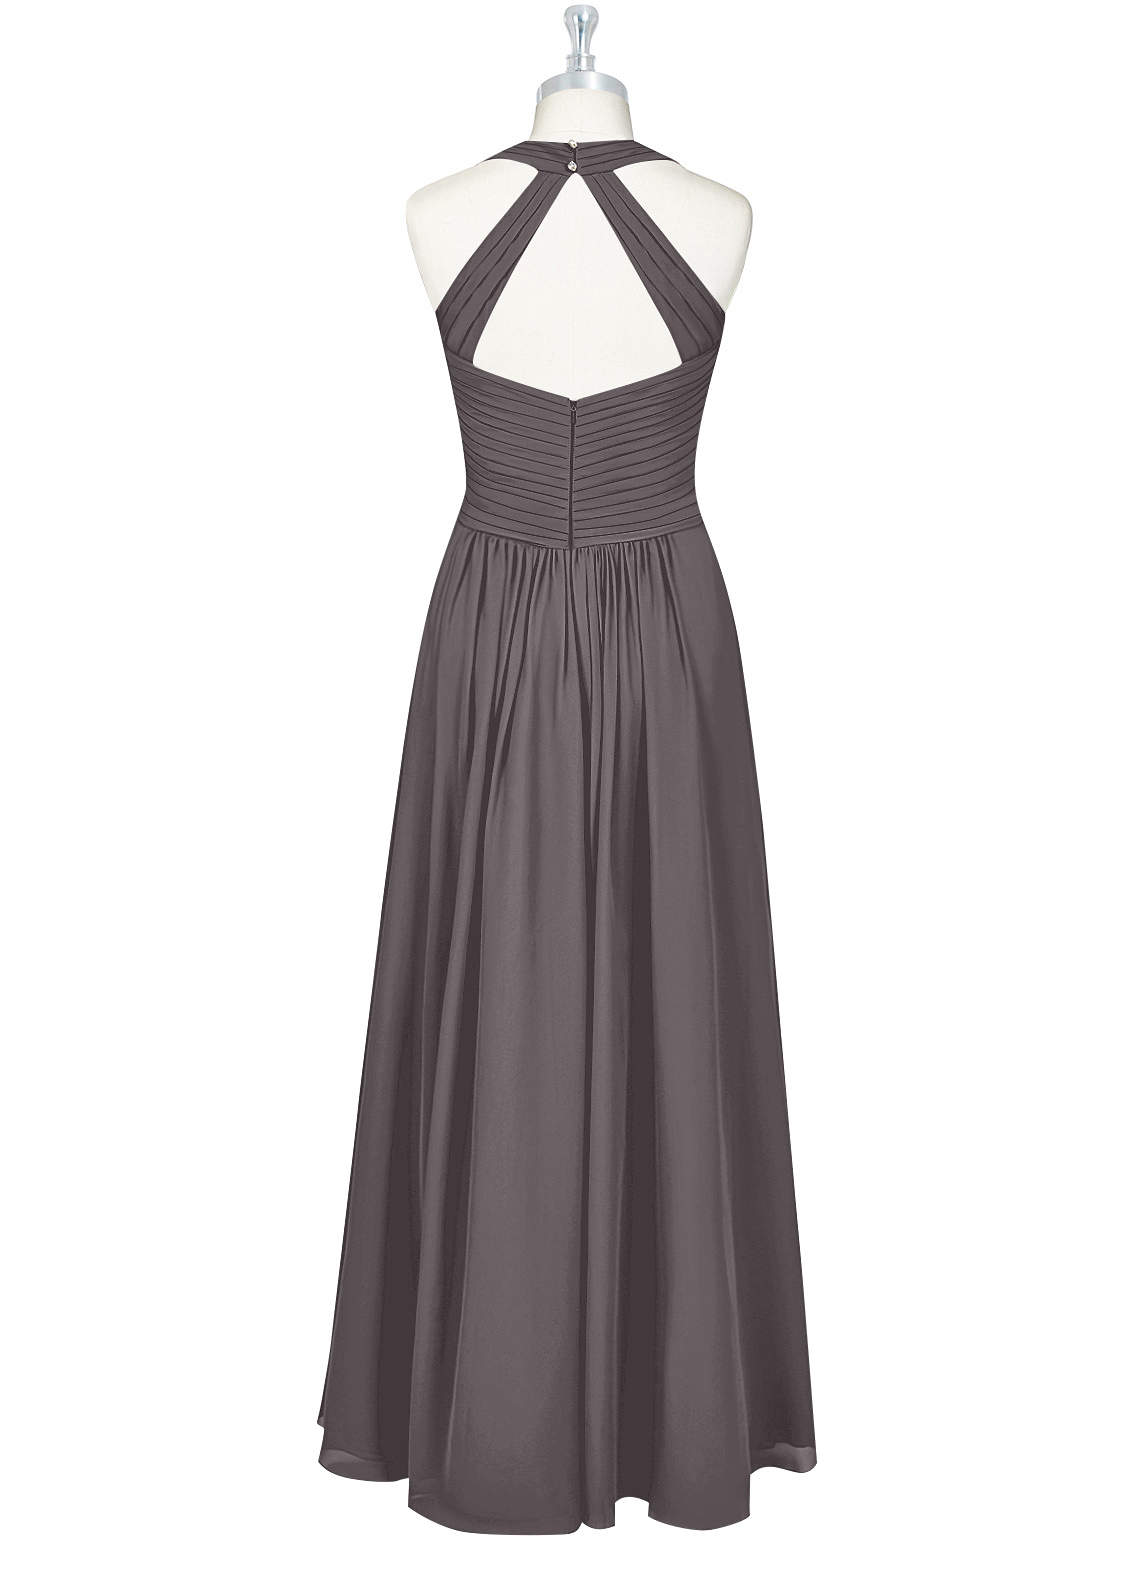 Azazie Claudia Bridesmaid Dresses A-Line Sweetheart Neckline Chiffon Floor-Length Dress image1